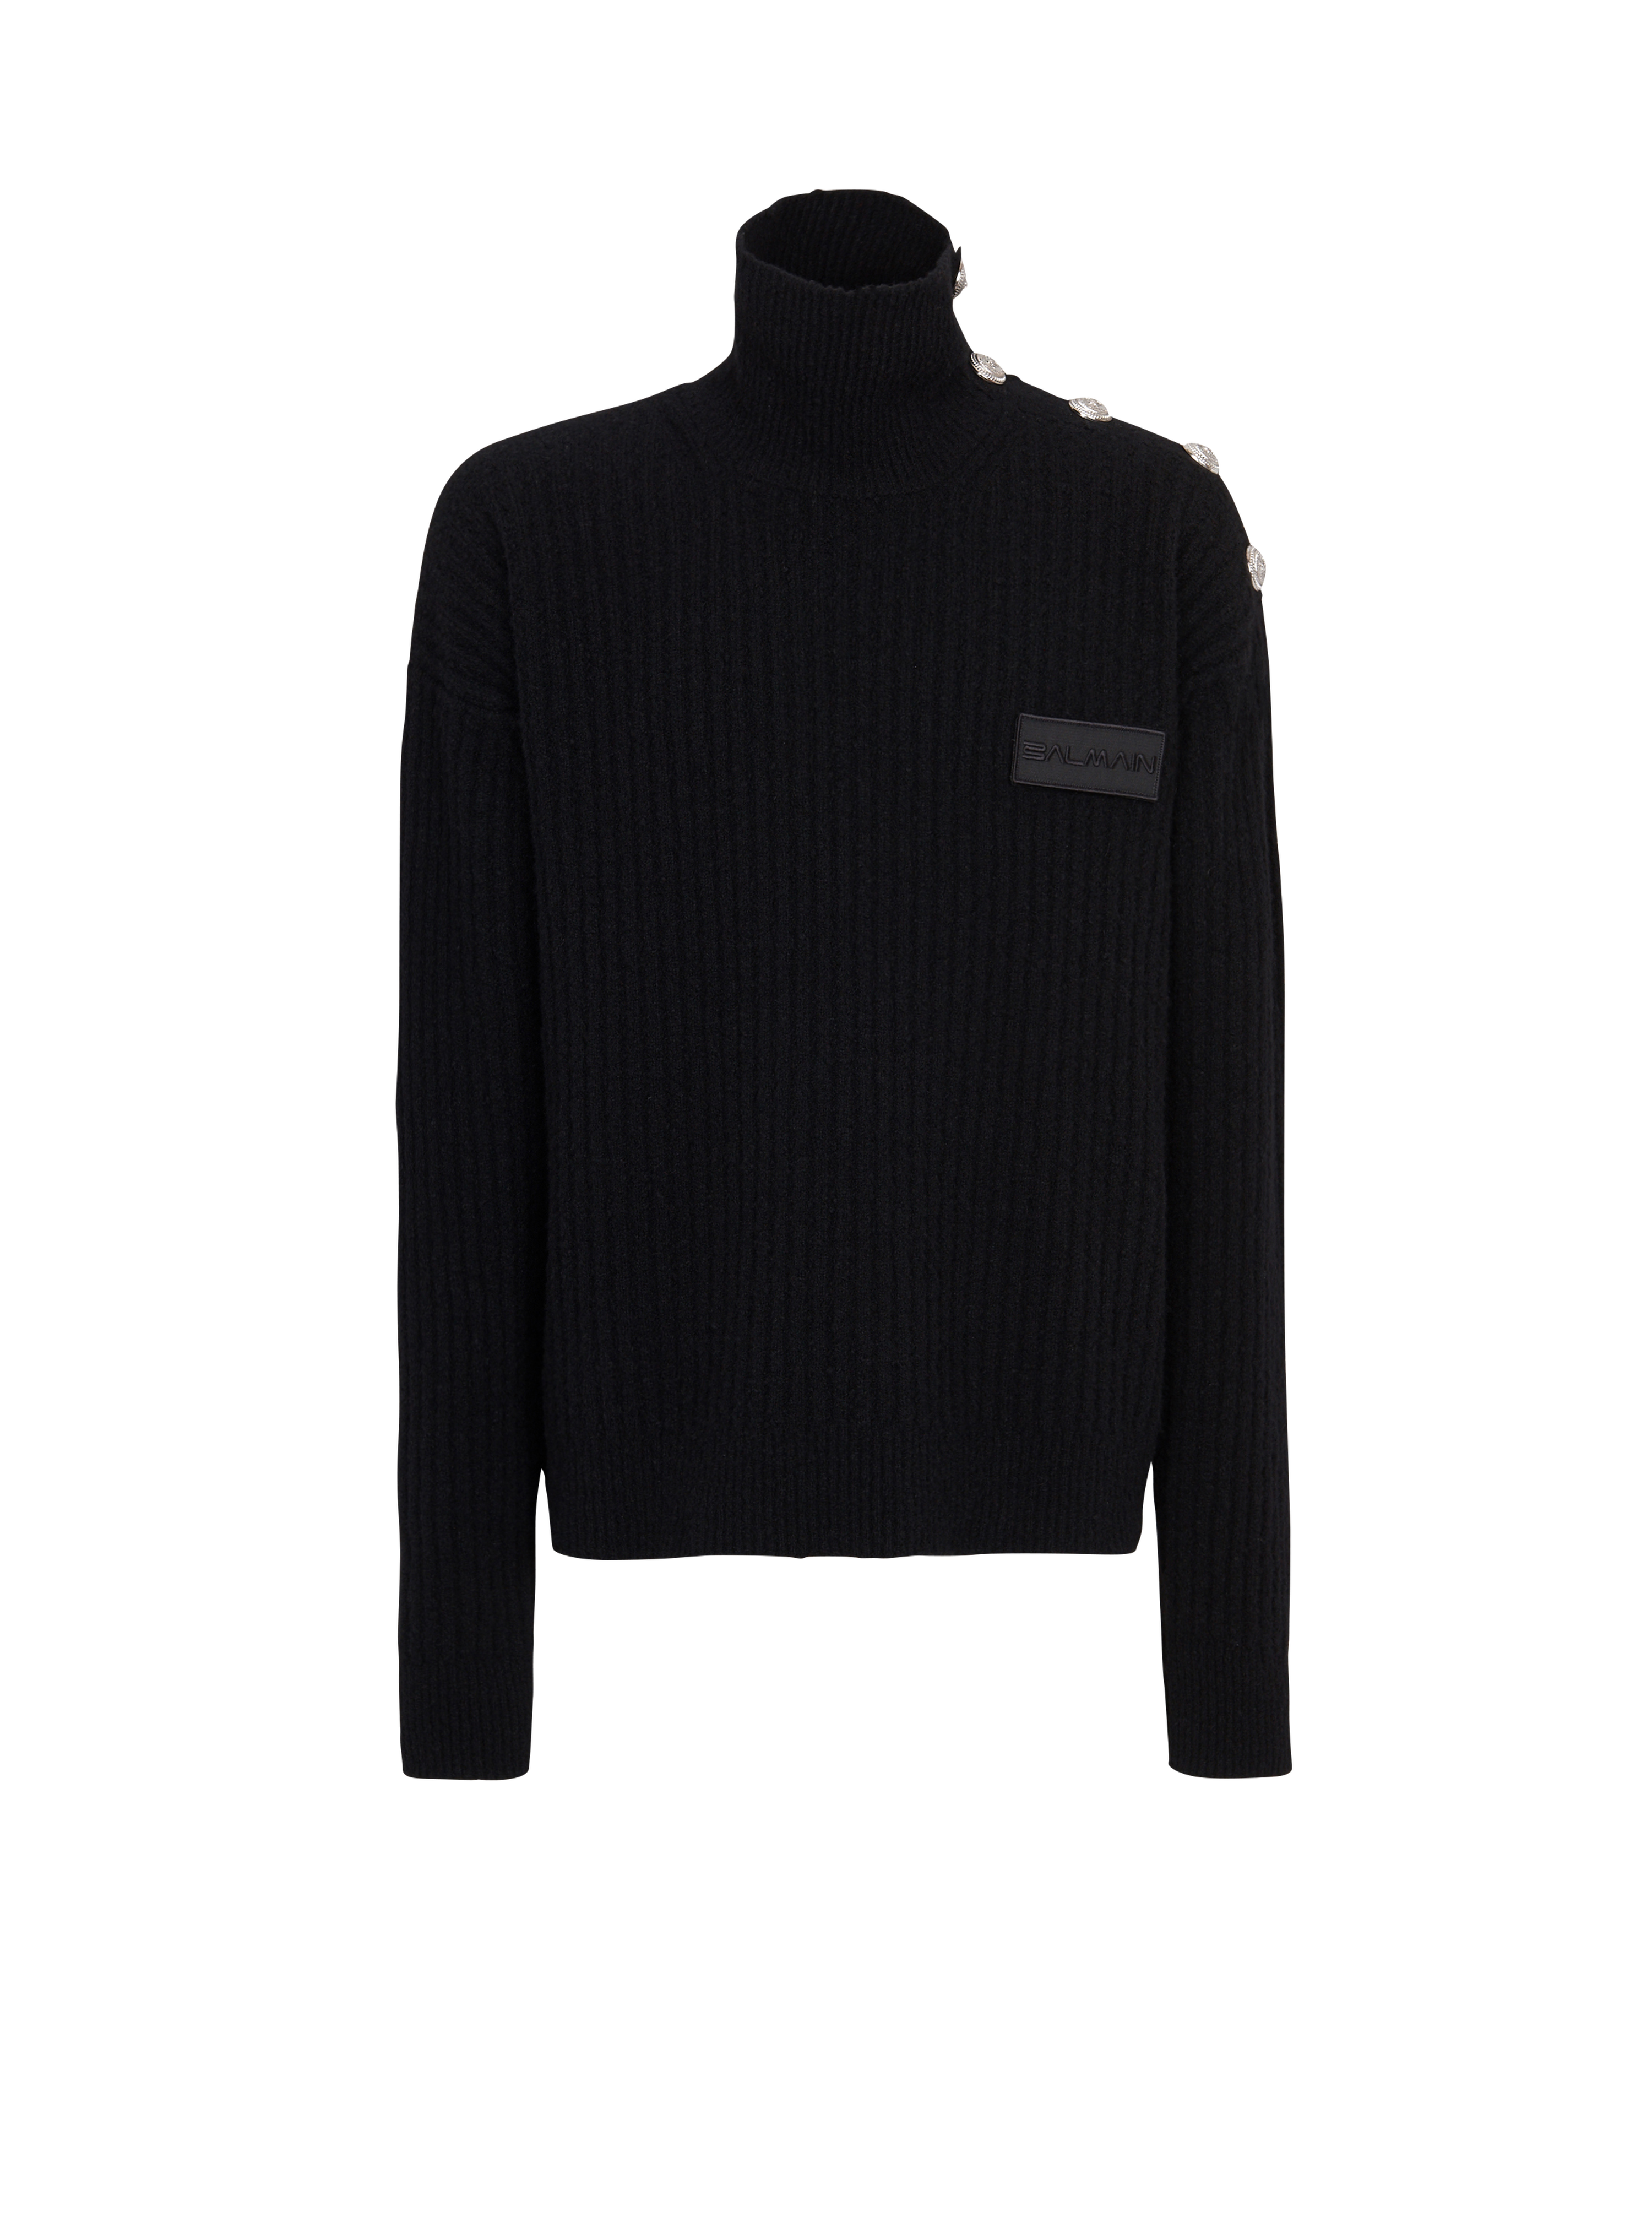 Cashmere turtleneck sweater, black